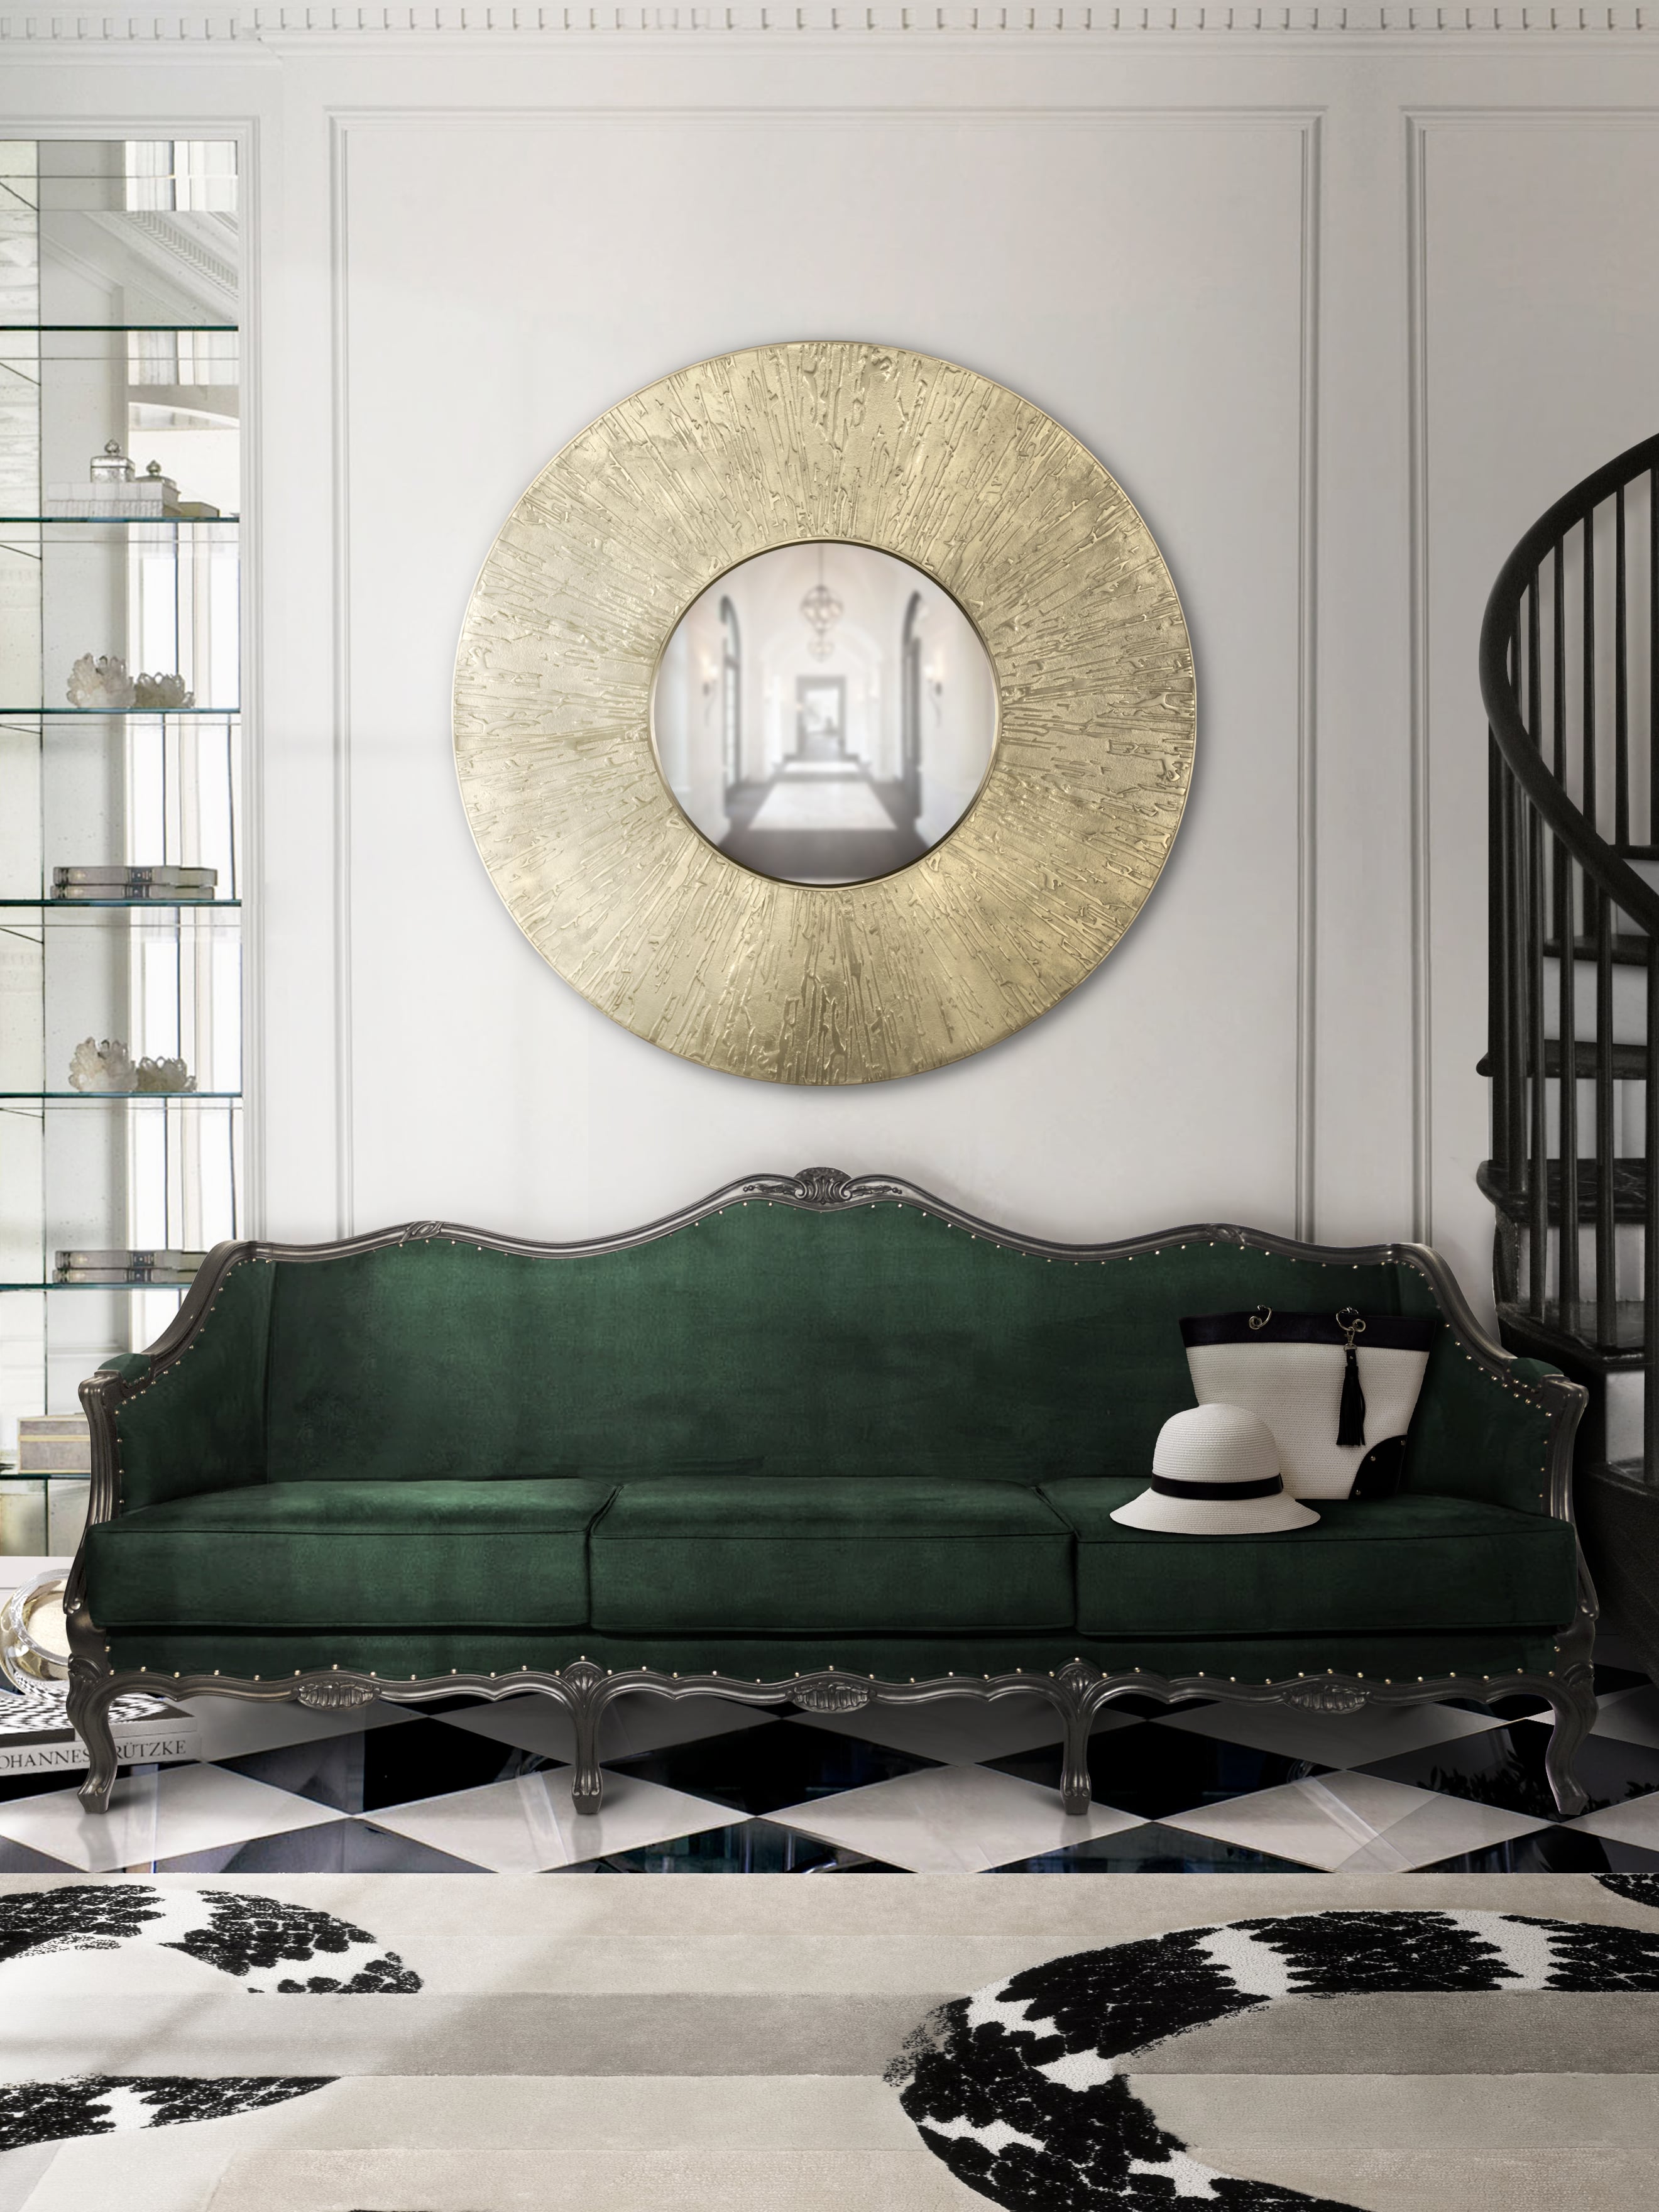 Hallway Design With A Green Velvet Sofa - Home'Society